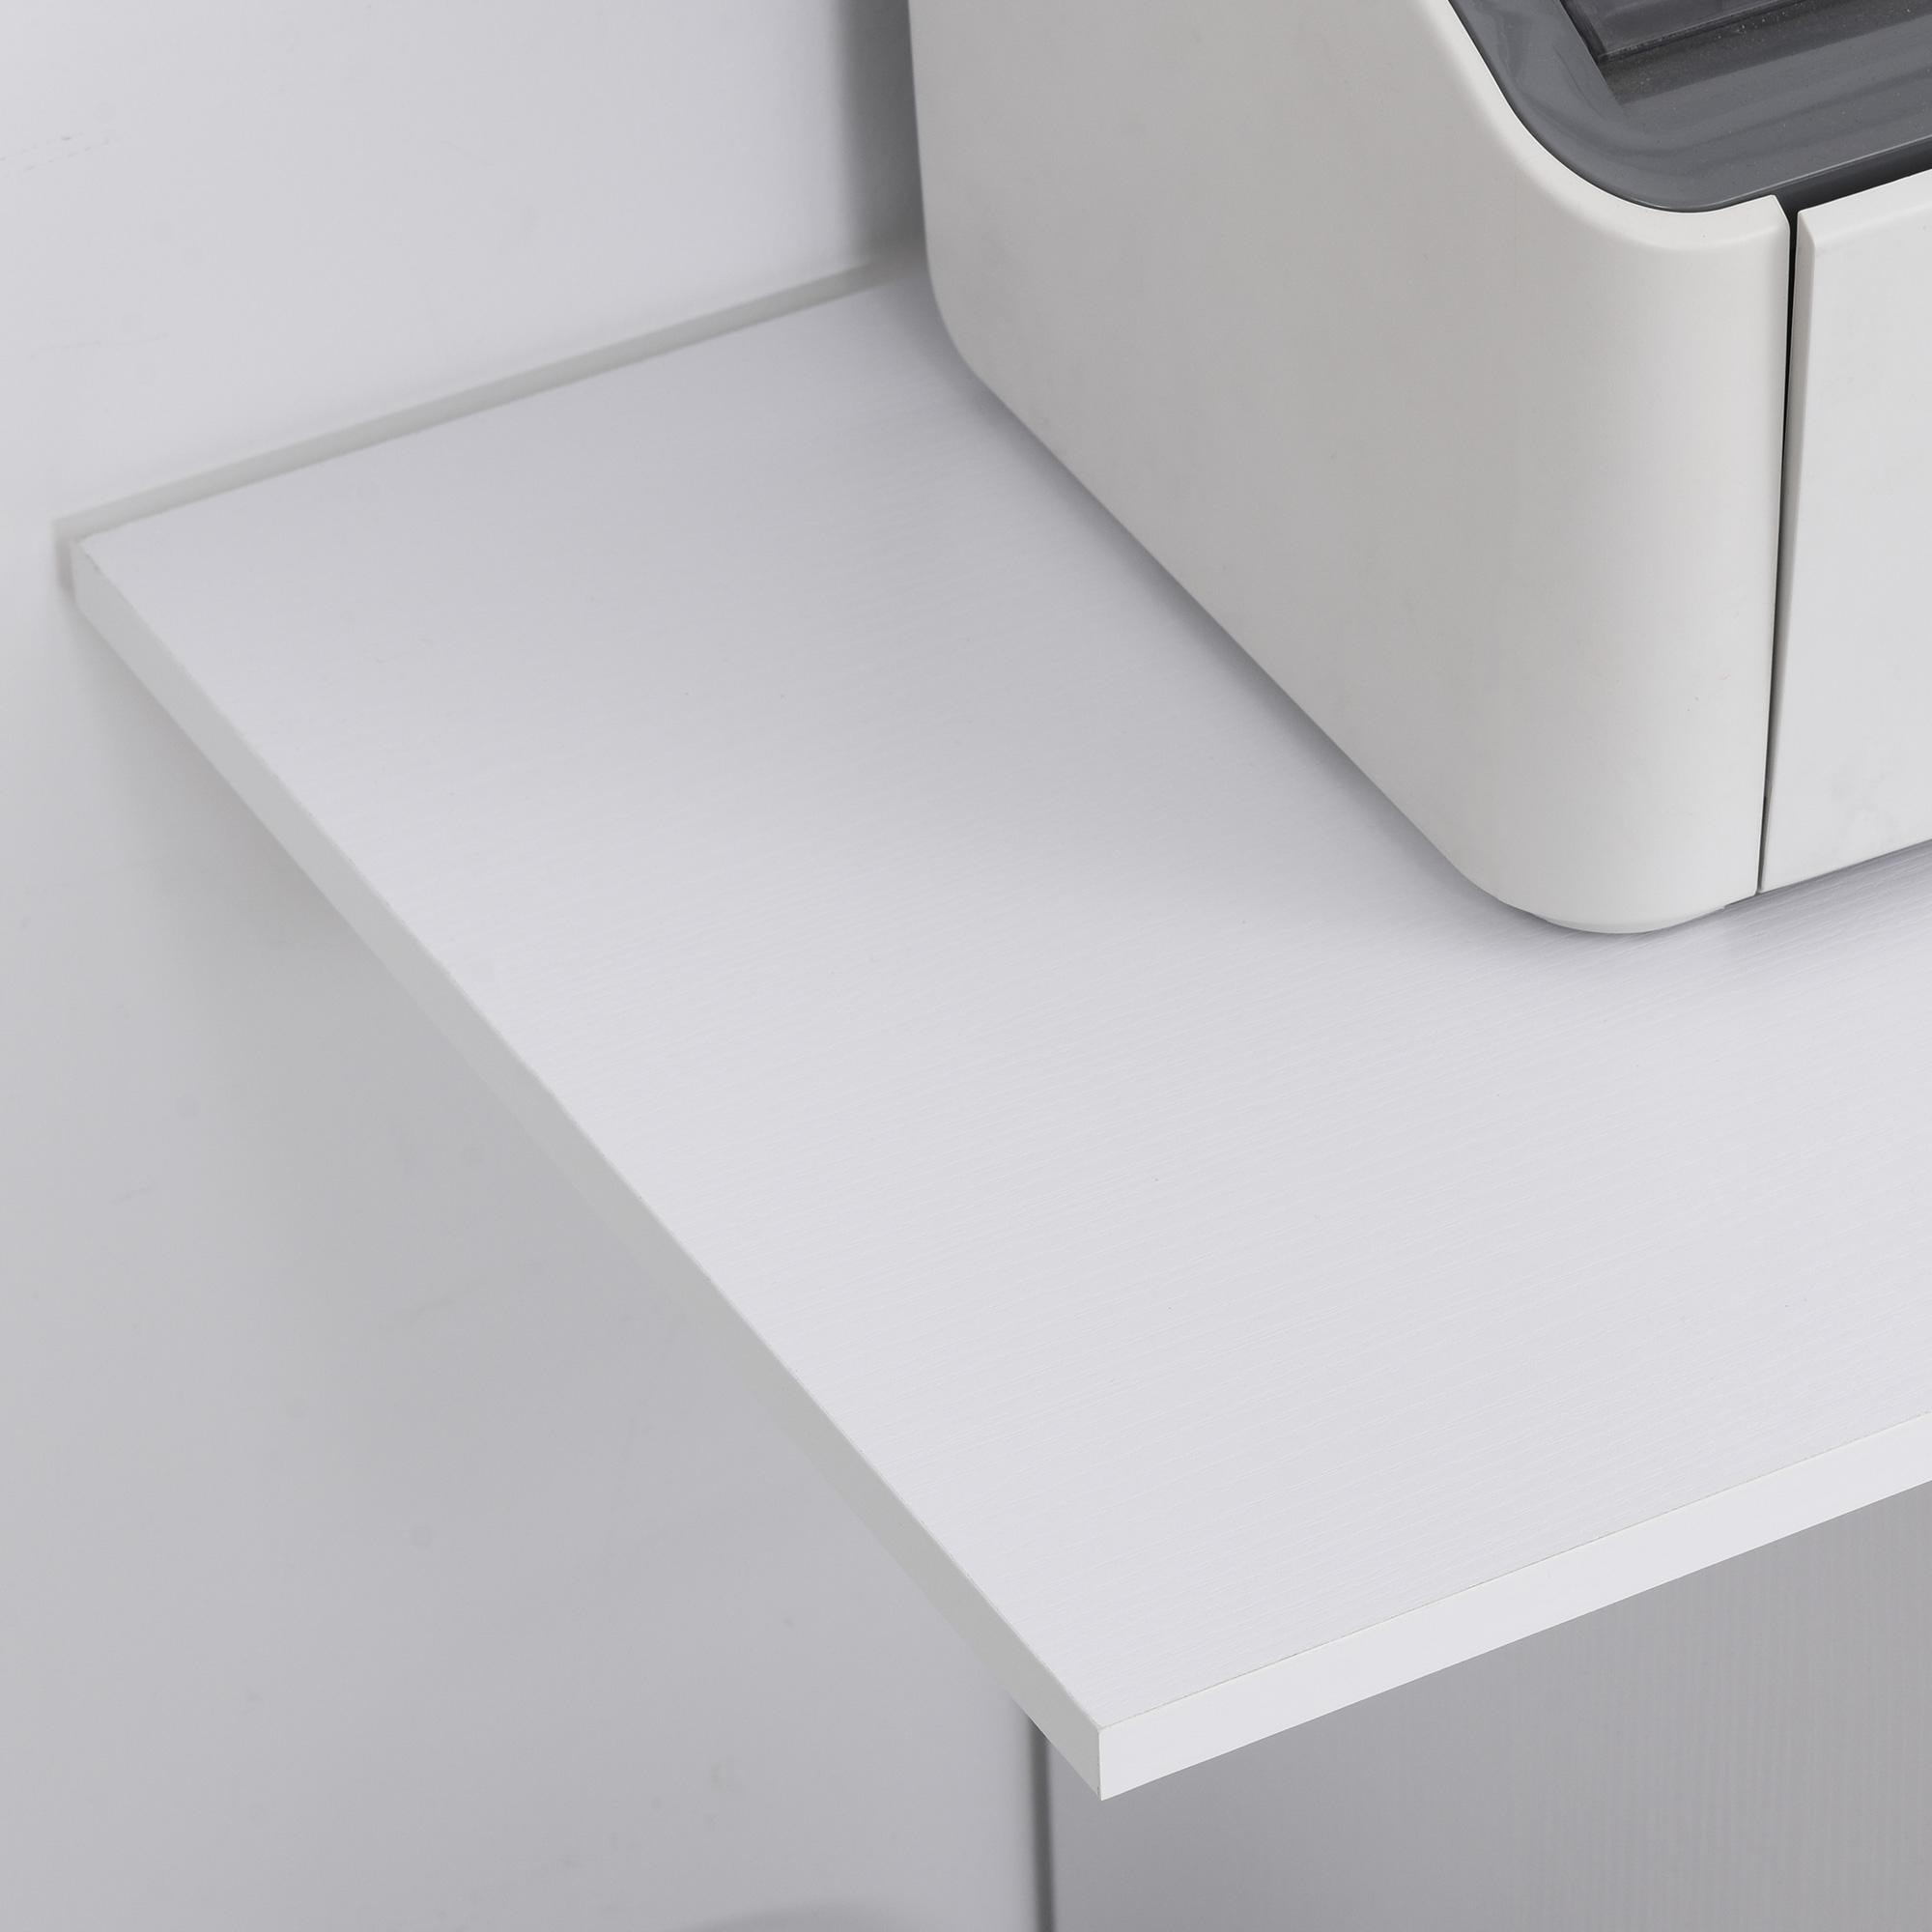 Support d'imprimante organiseur bureau caisson 2 niches tiroir espace CPU + grand plateau panneaux particules blanc